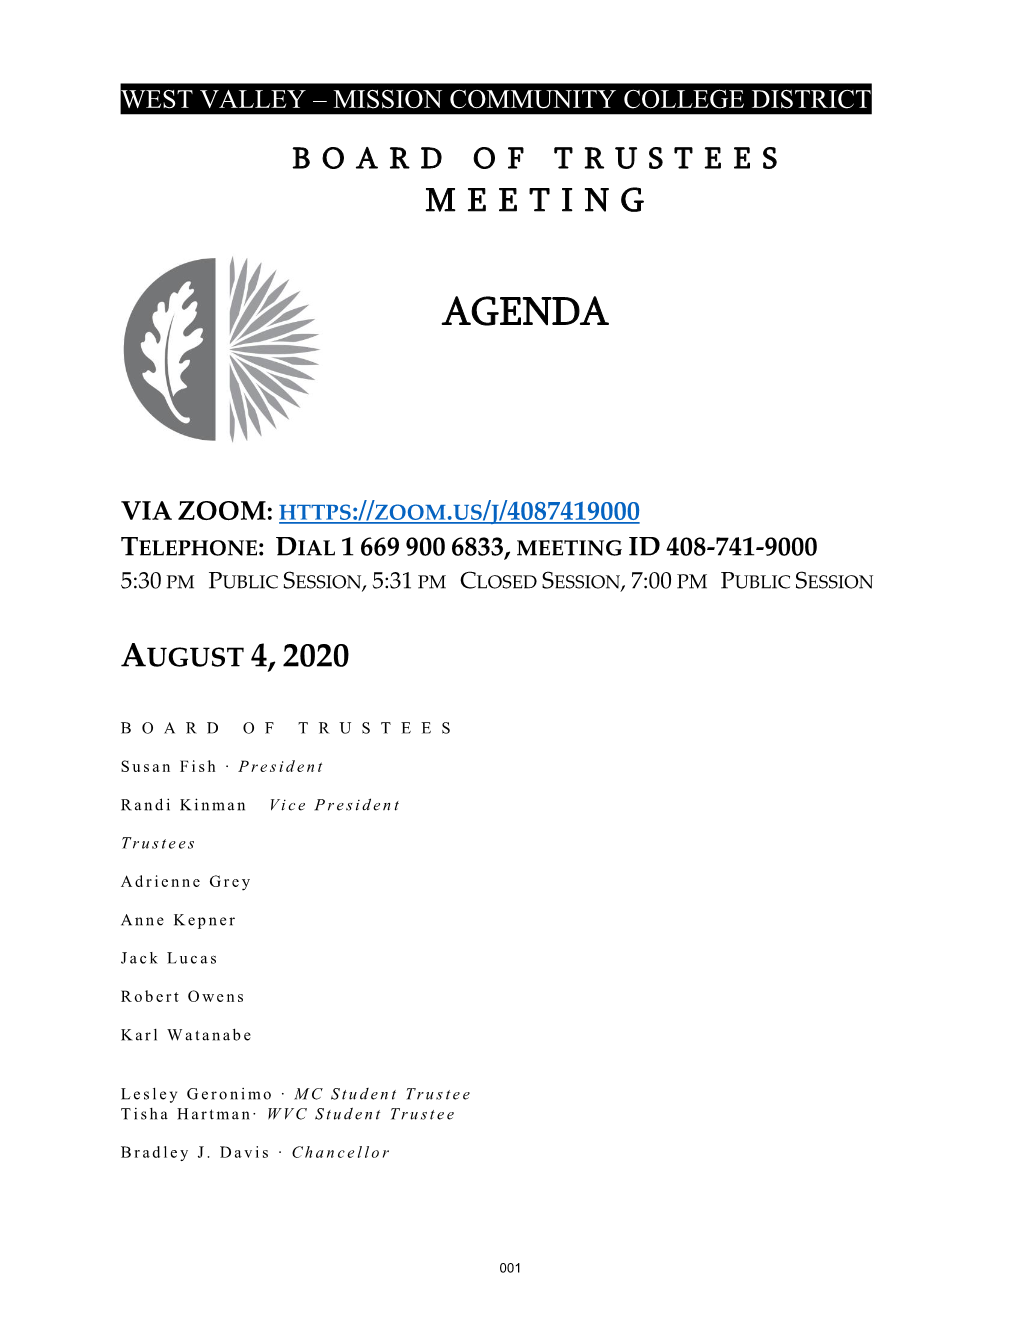 August 4, 2020, Board Agenda